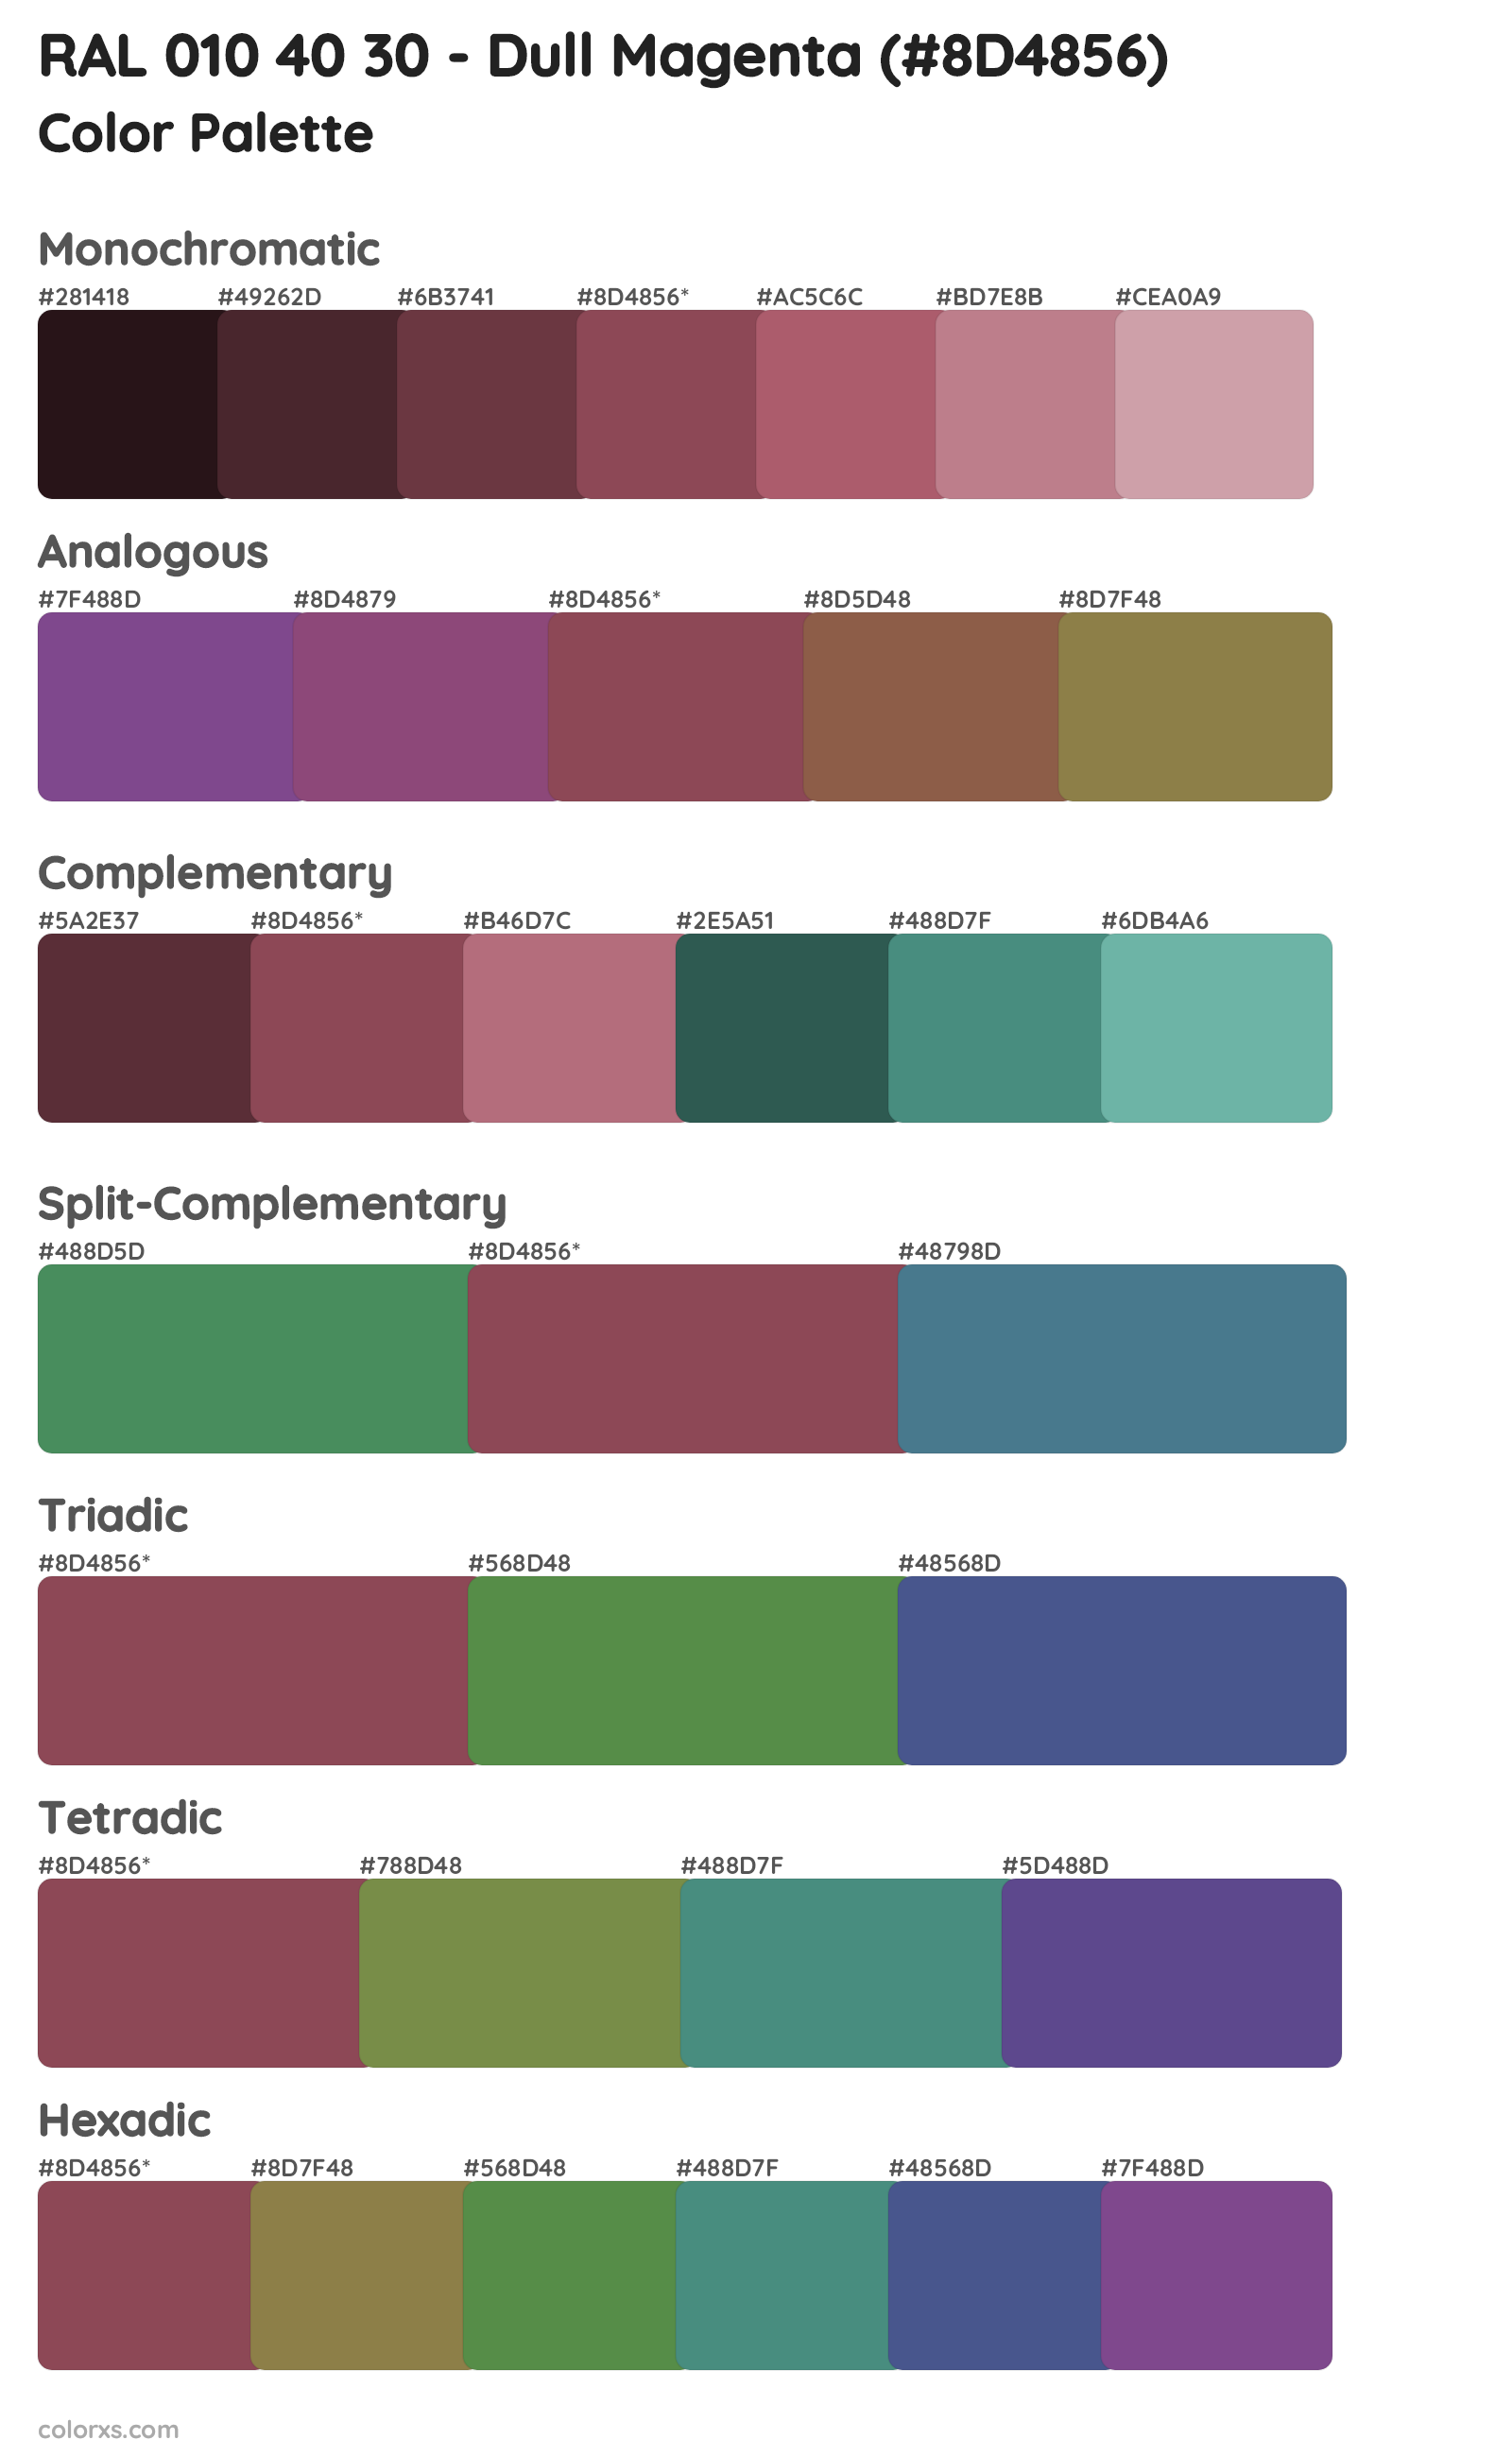 RAL 010 40 30 - Dull Magenta Color Scheme Palettes